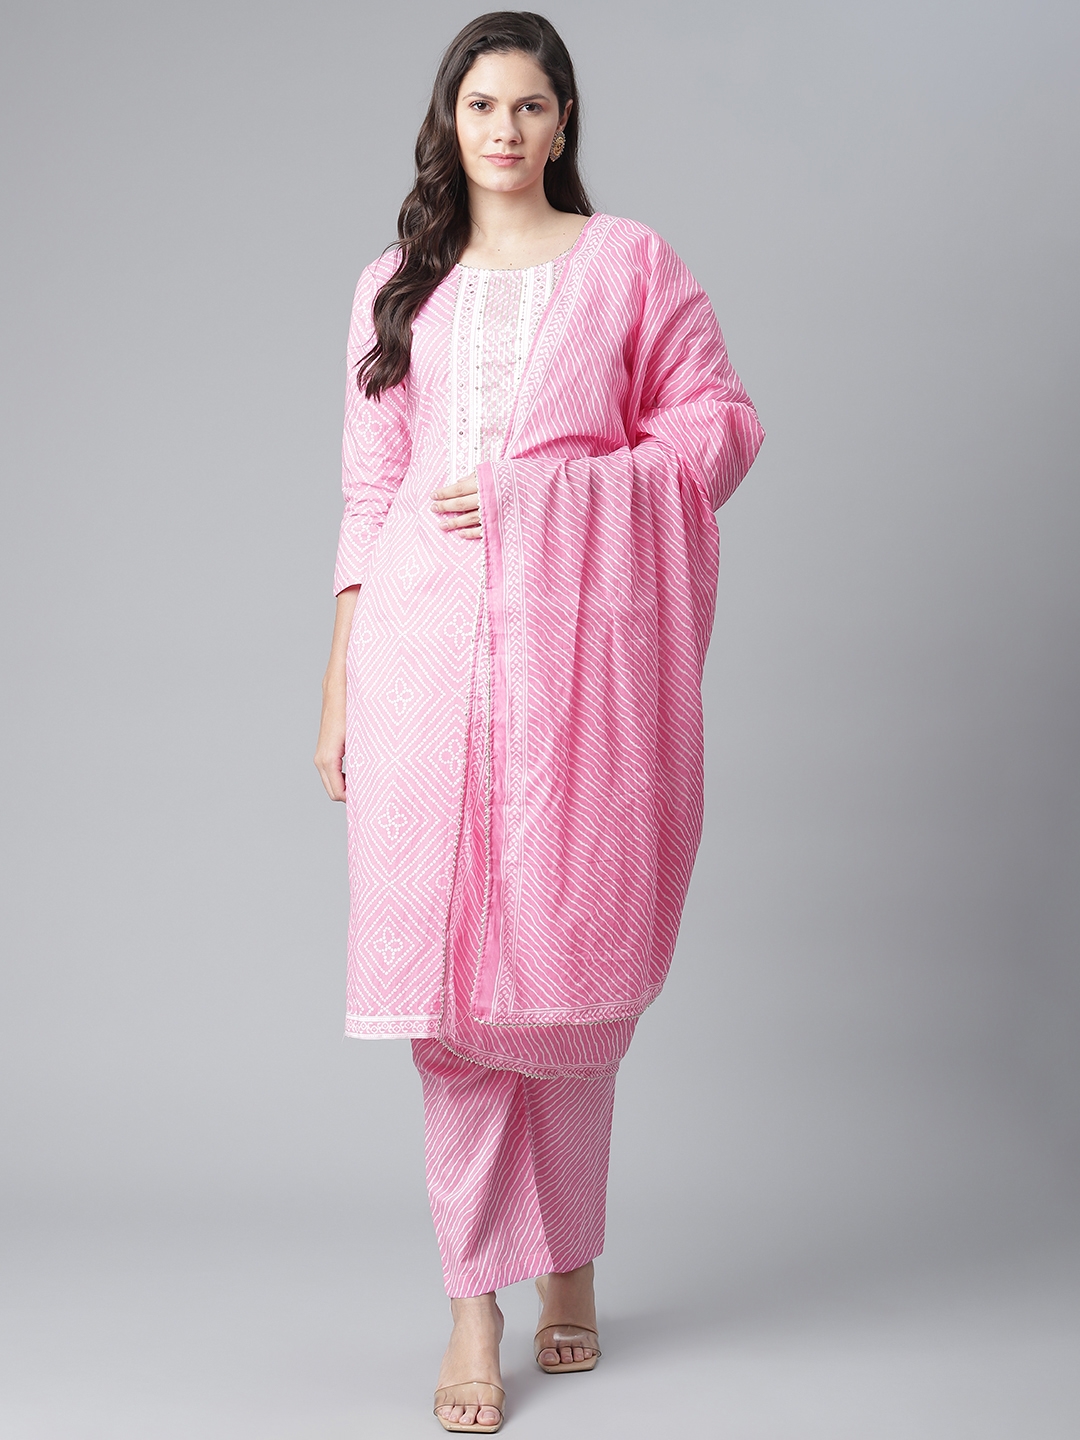 Readiprint Fashions Pink   White Cotton Bandhani Printed Unstitched Dress Material